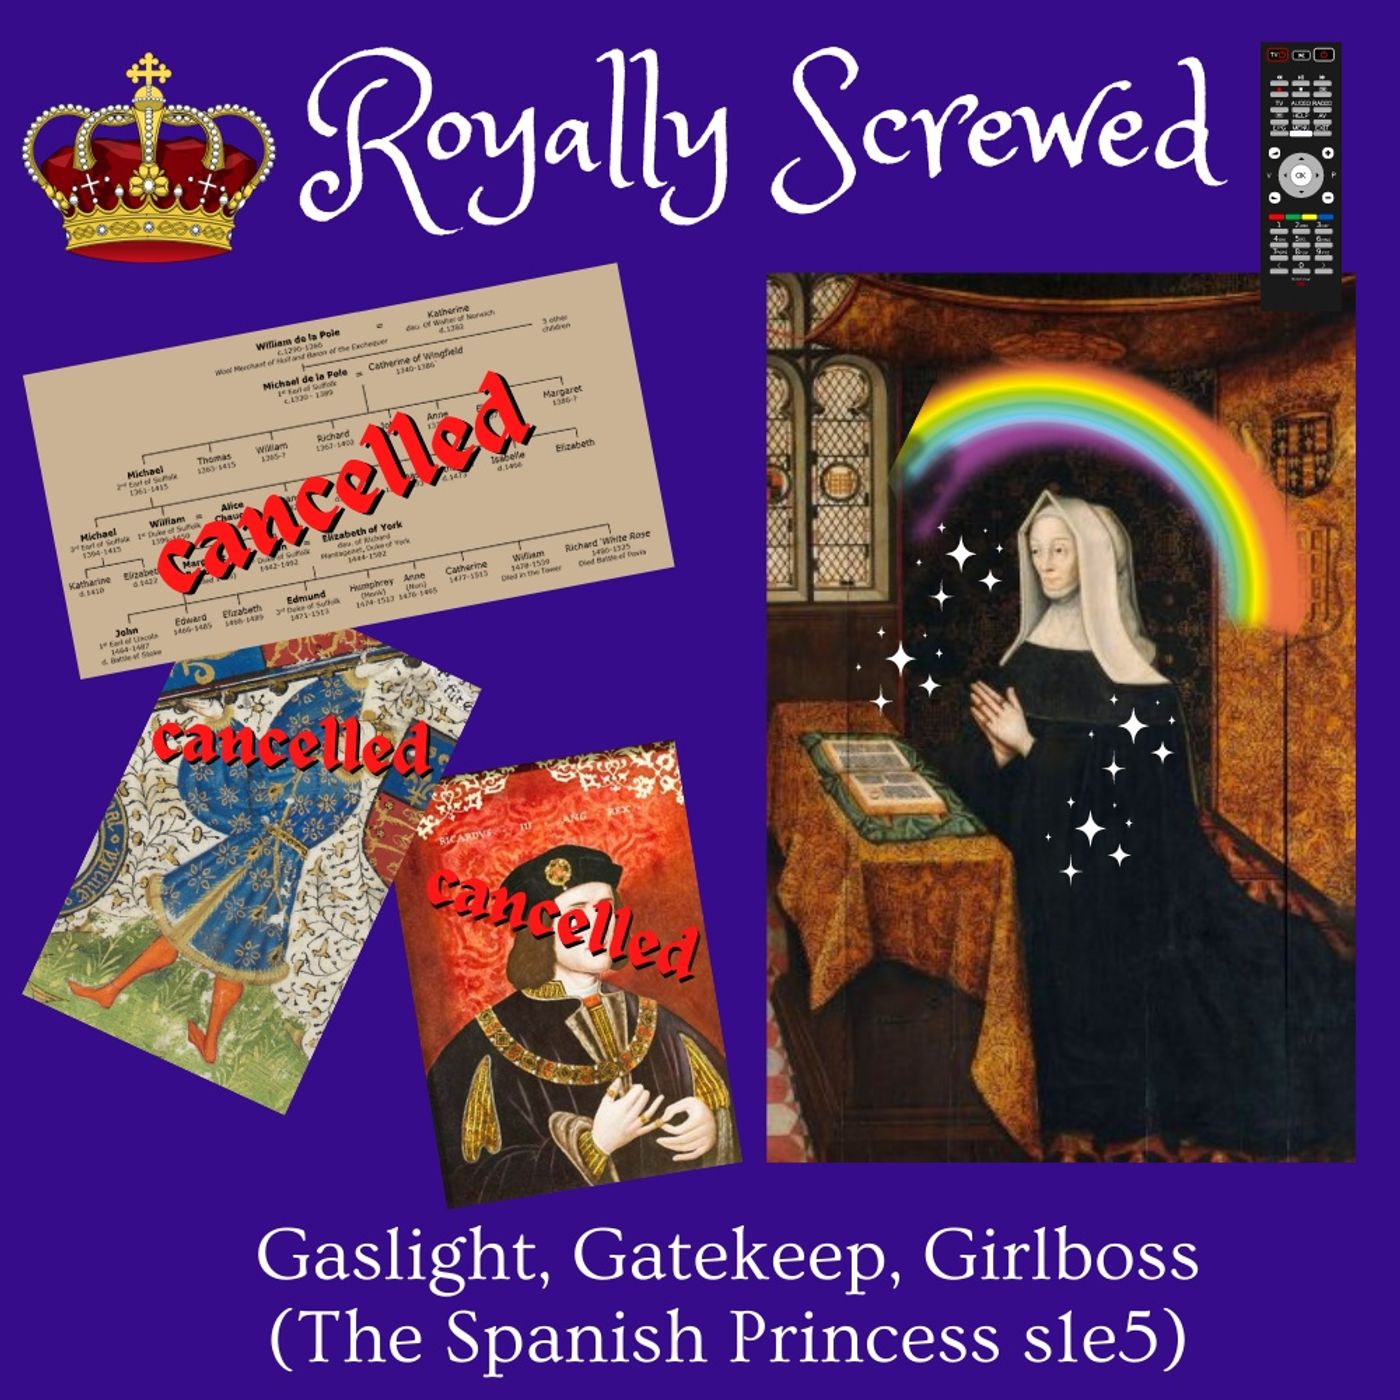 Gaslight, Gatekeep, Girlboss (The Spanish Princess s1e5)